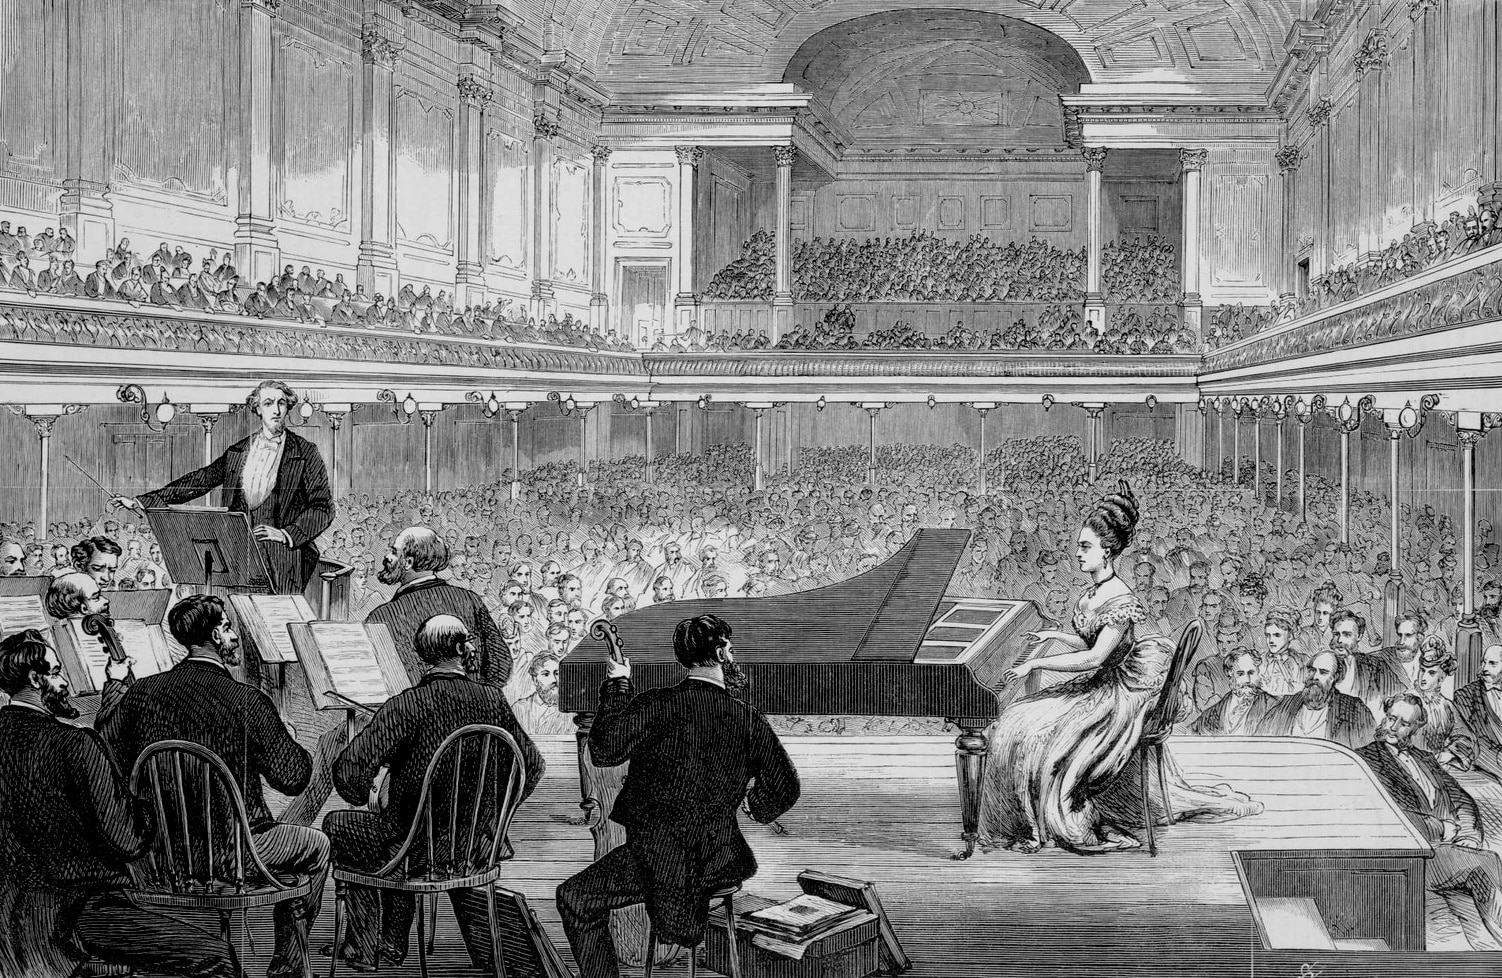 Madame Arabella Goddard's hospital concert at the Melbourne Town Hall (October 1874, Samuel Calvert, engraver)